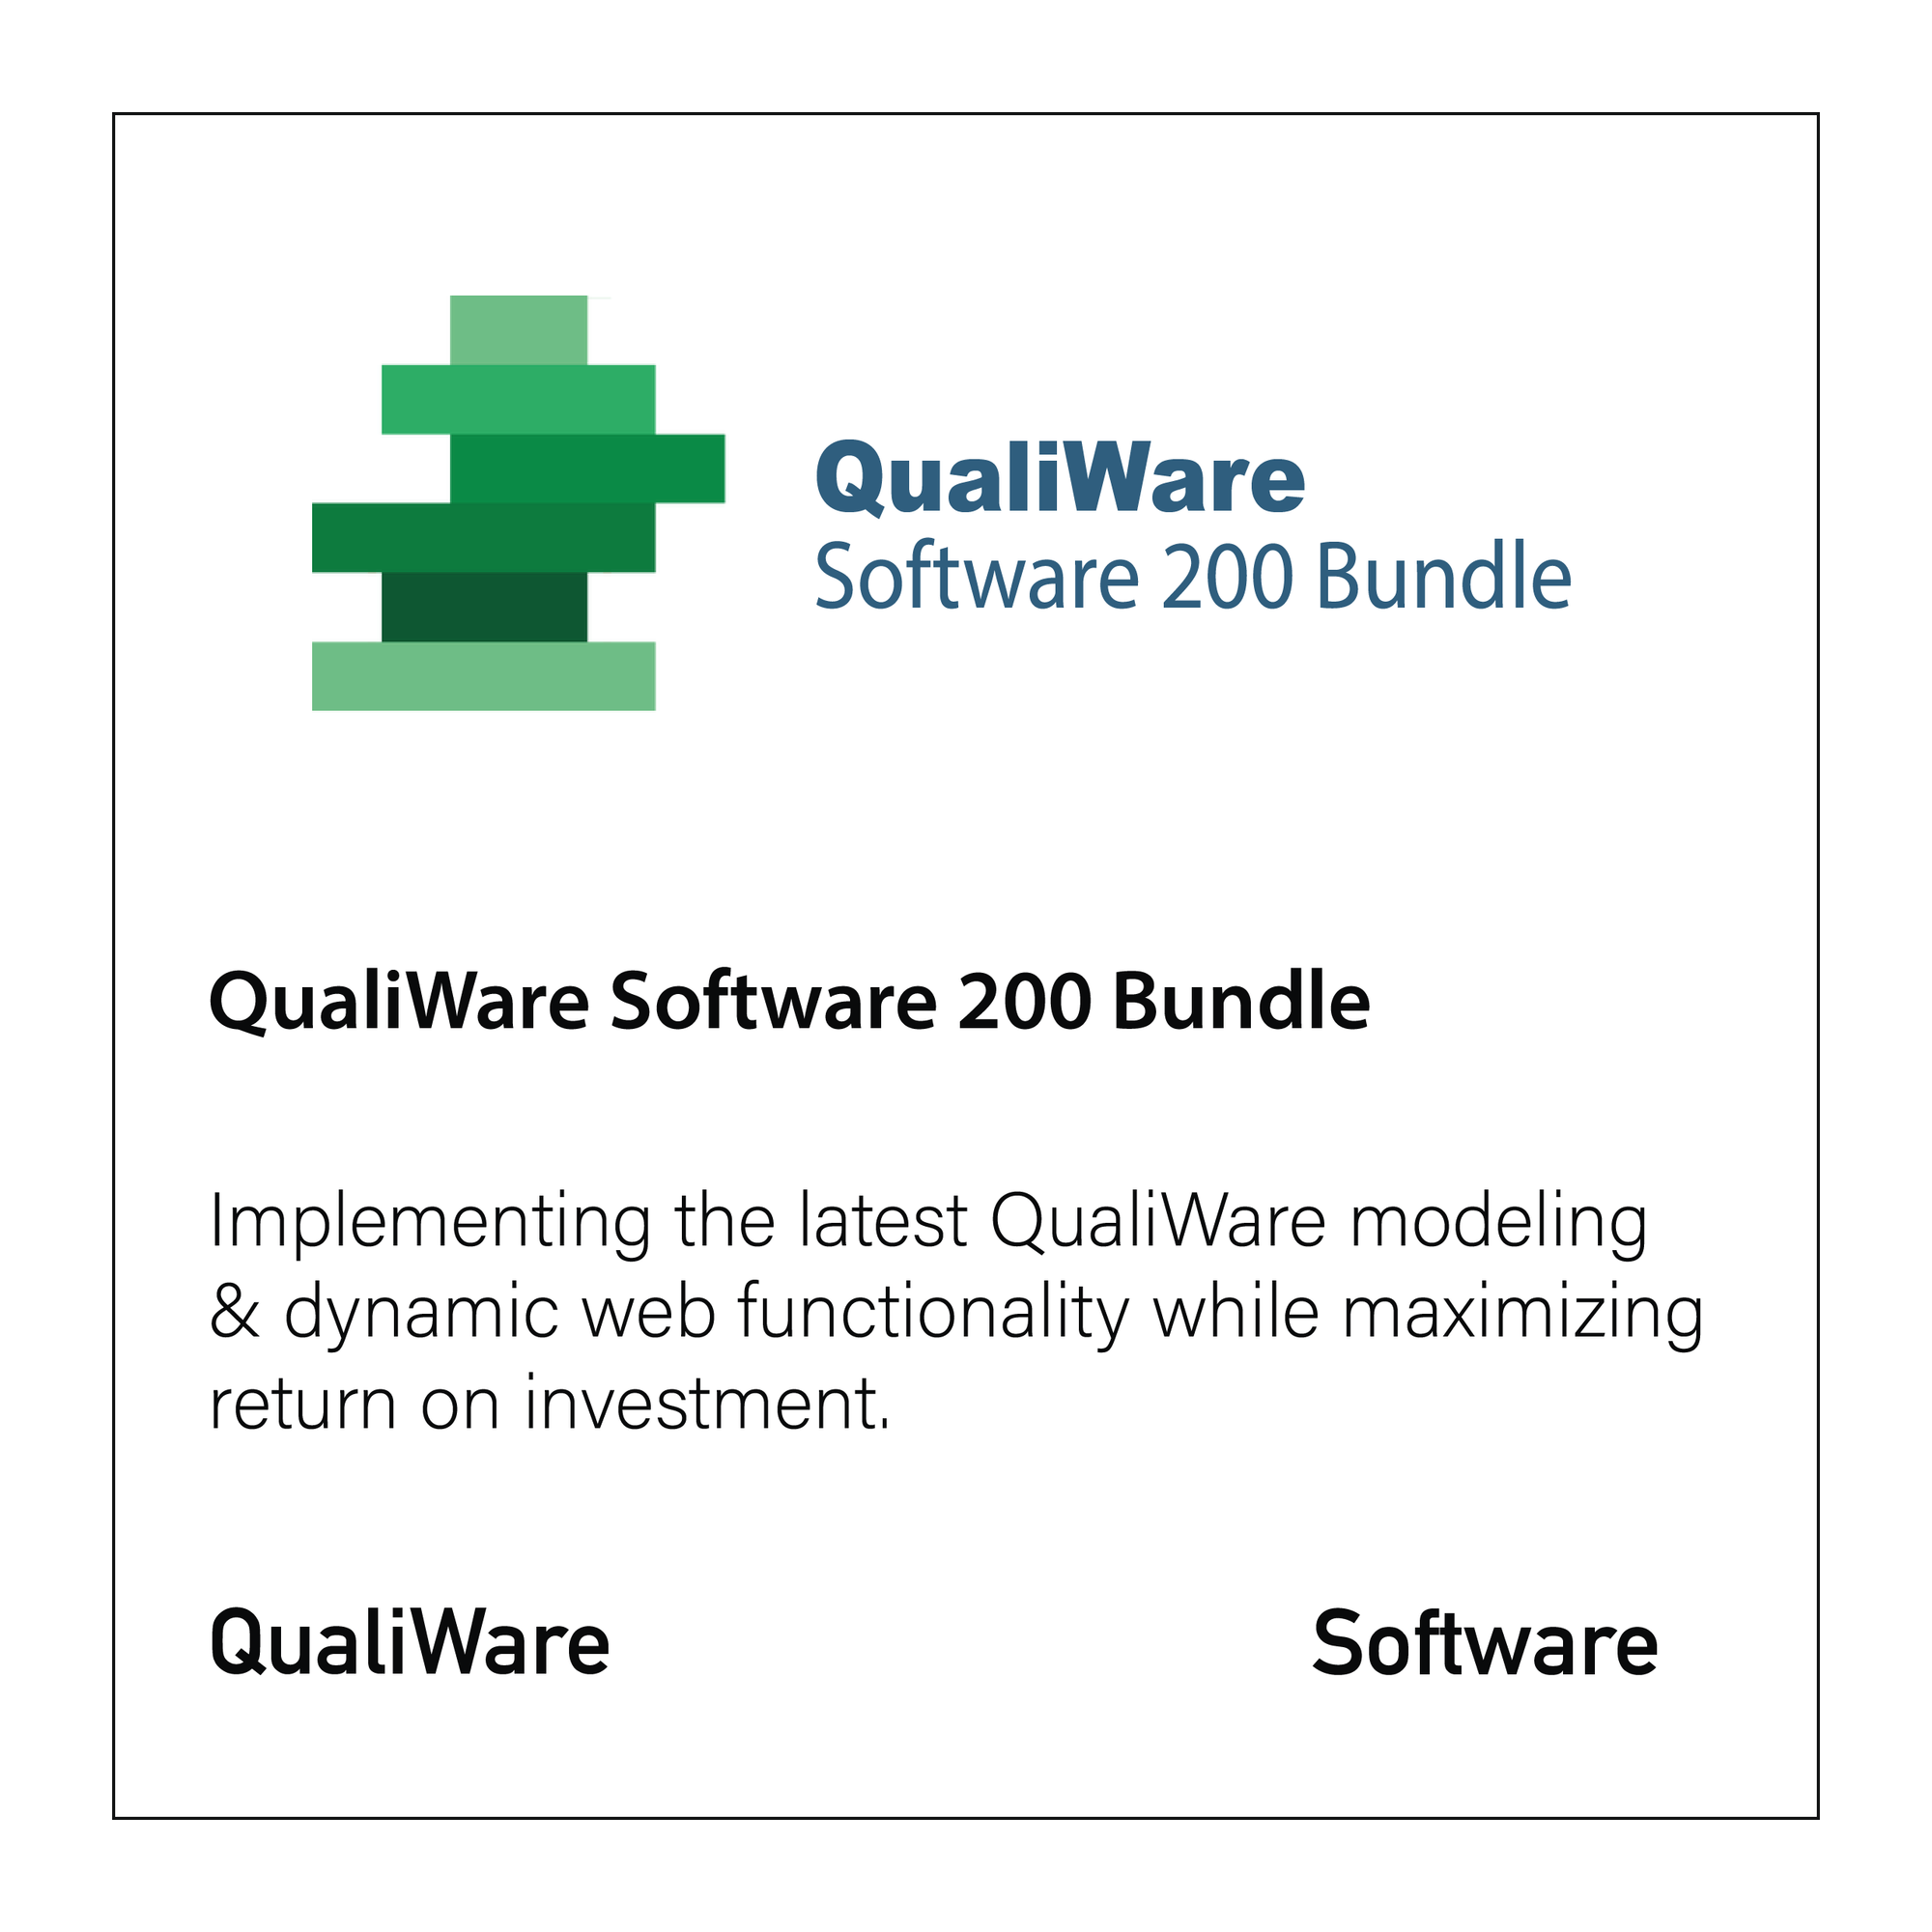 QualiWare Software 200 Bundle